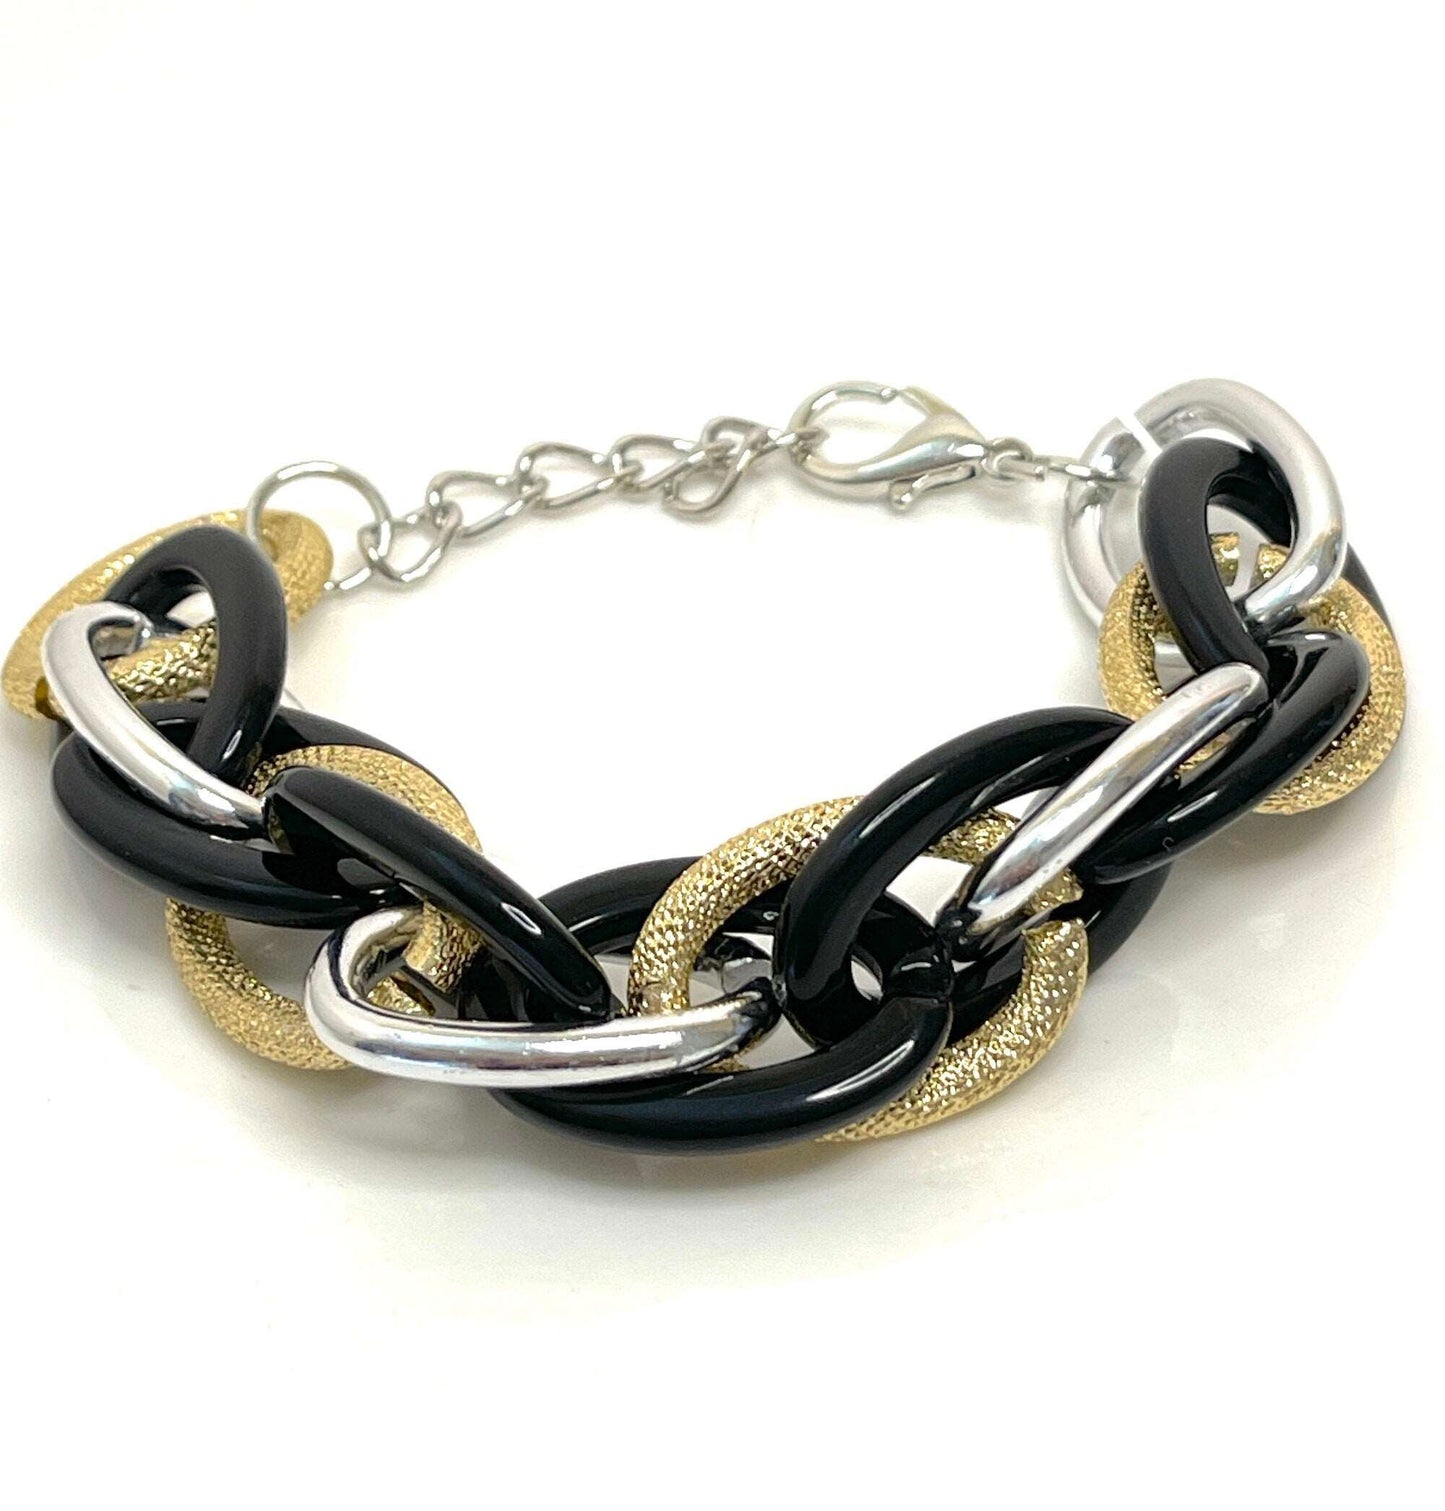 Black Silver and Gold Chunky Chain Bracelet, Statement Bracelet, Textured Jewellery, Retro Acrylic Jewellery, Bracelets for Women